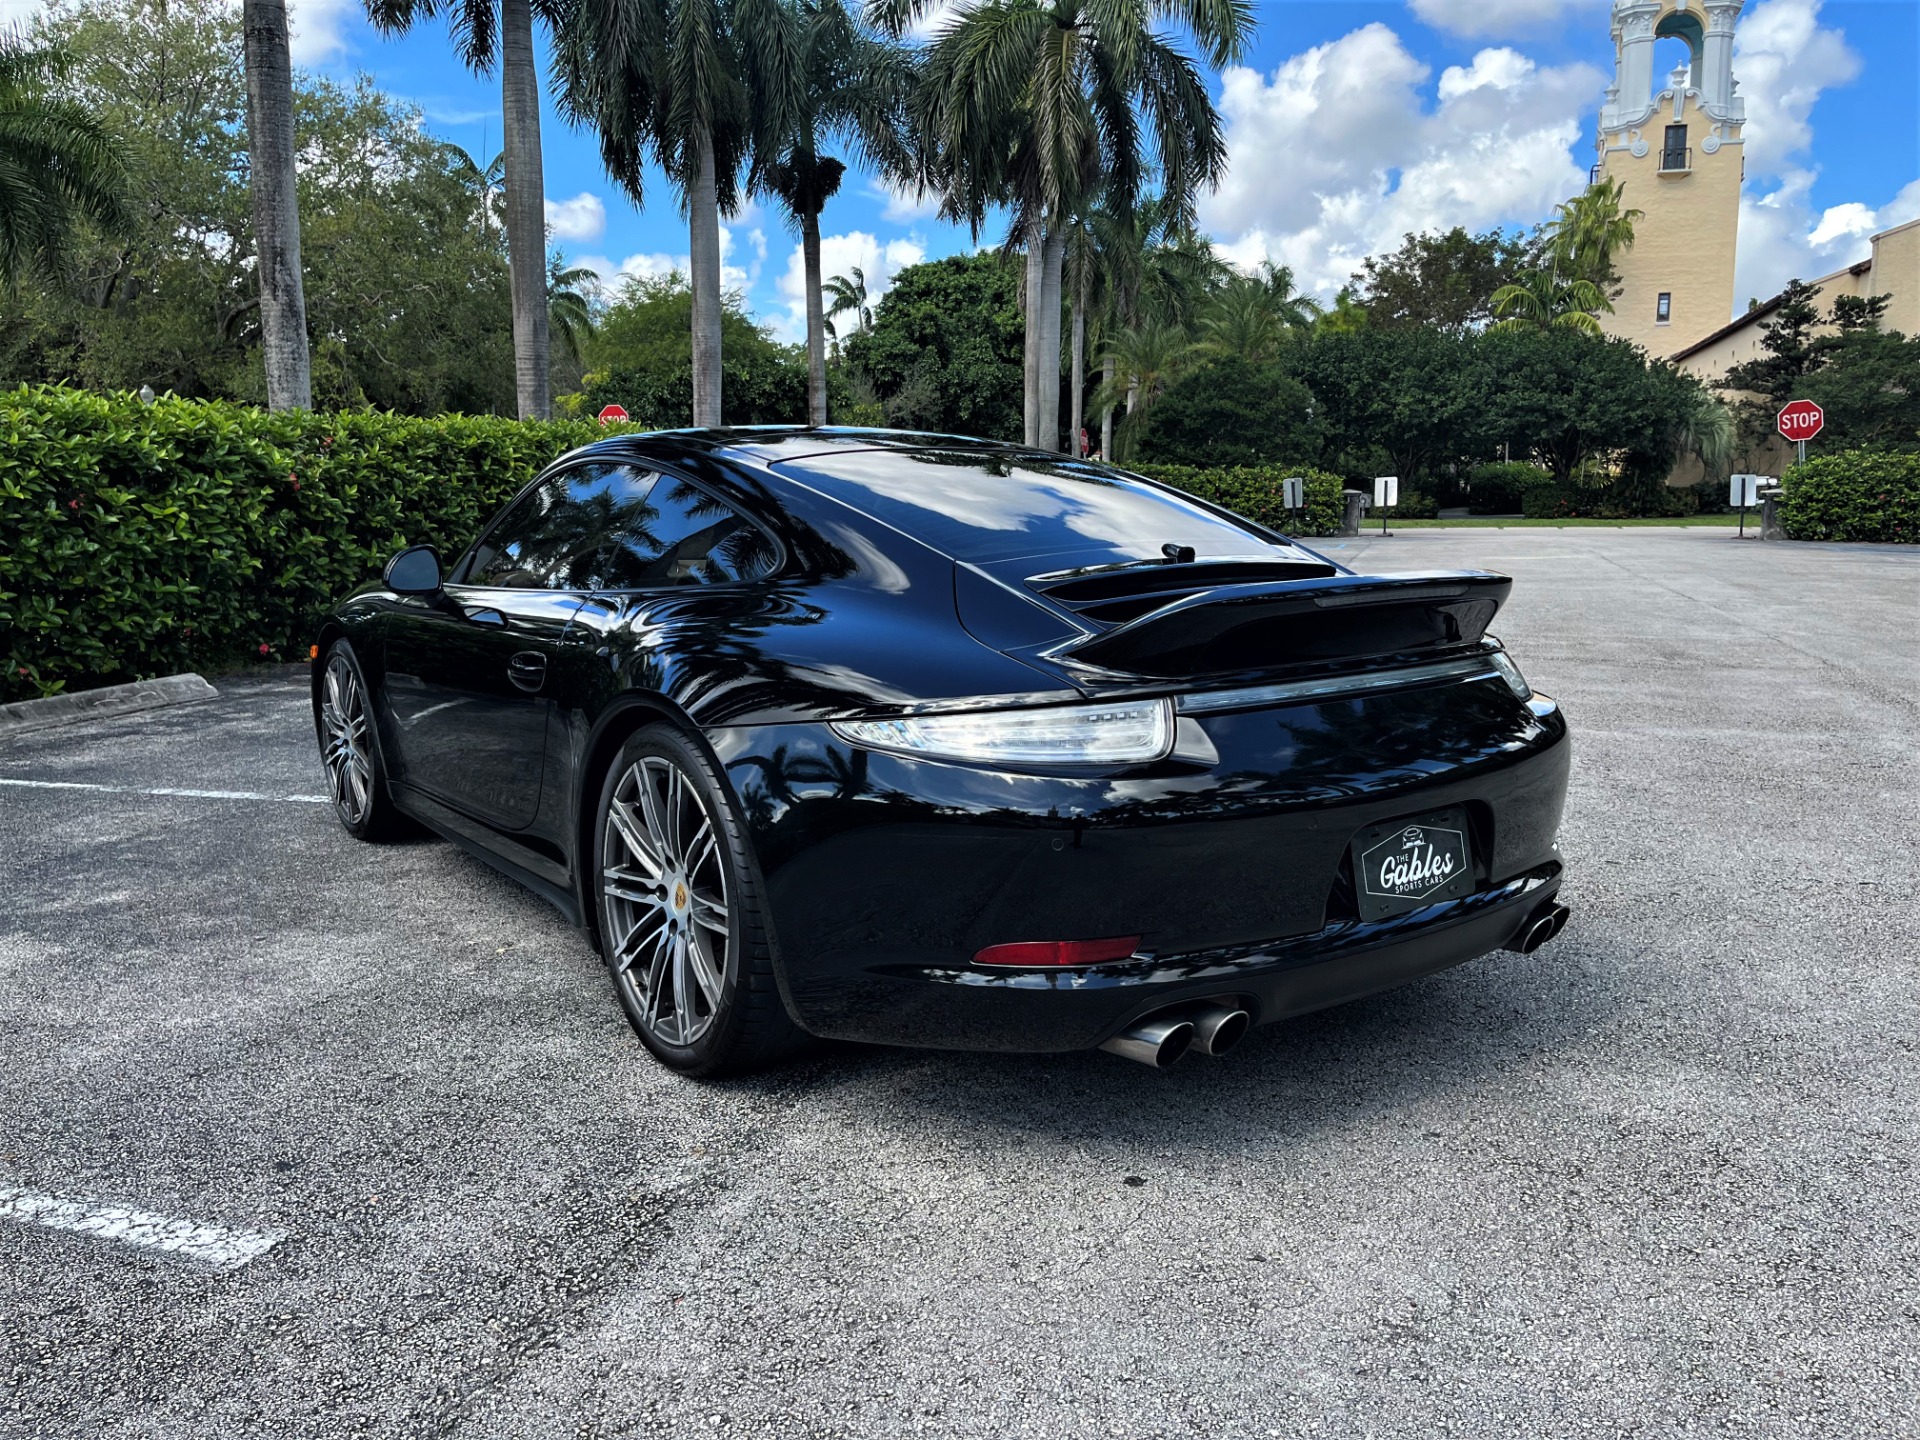 Used 2015 Porsche 911 Carrera 4S for sale $82,850 at The Gables Sports Cars in Miami FL 33146 2